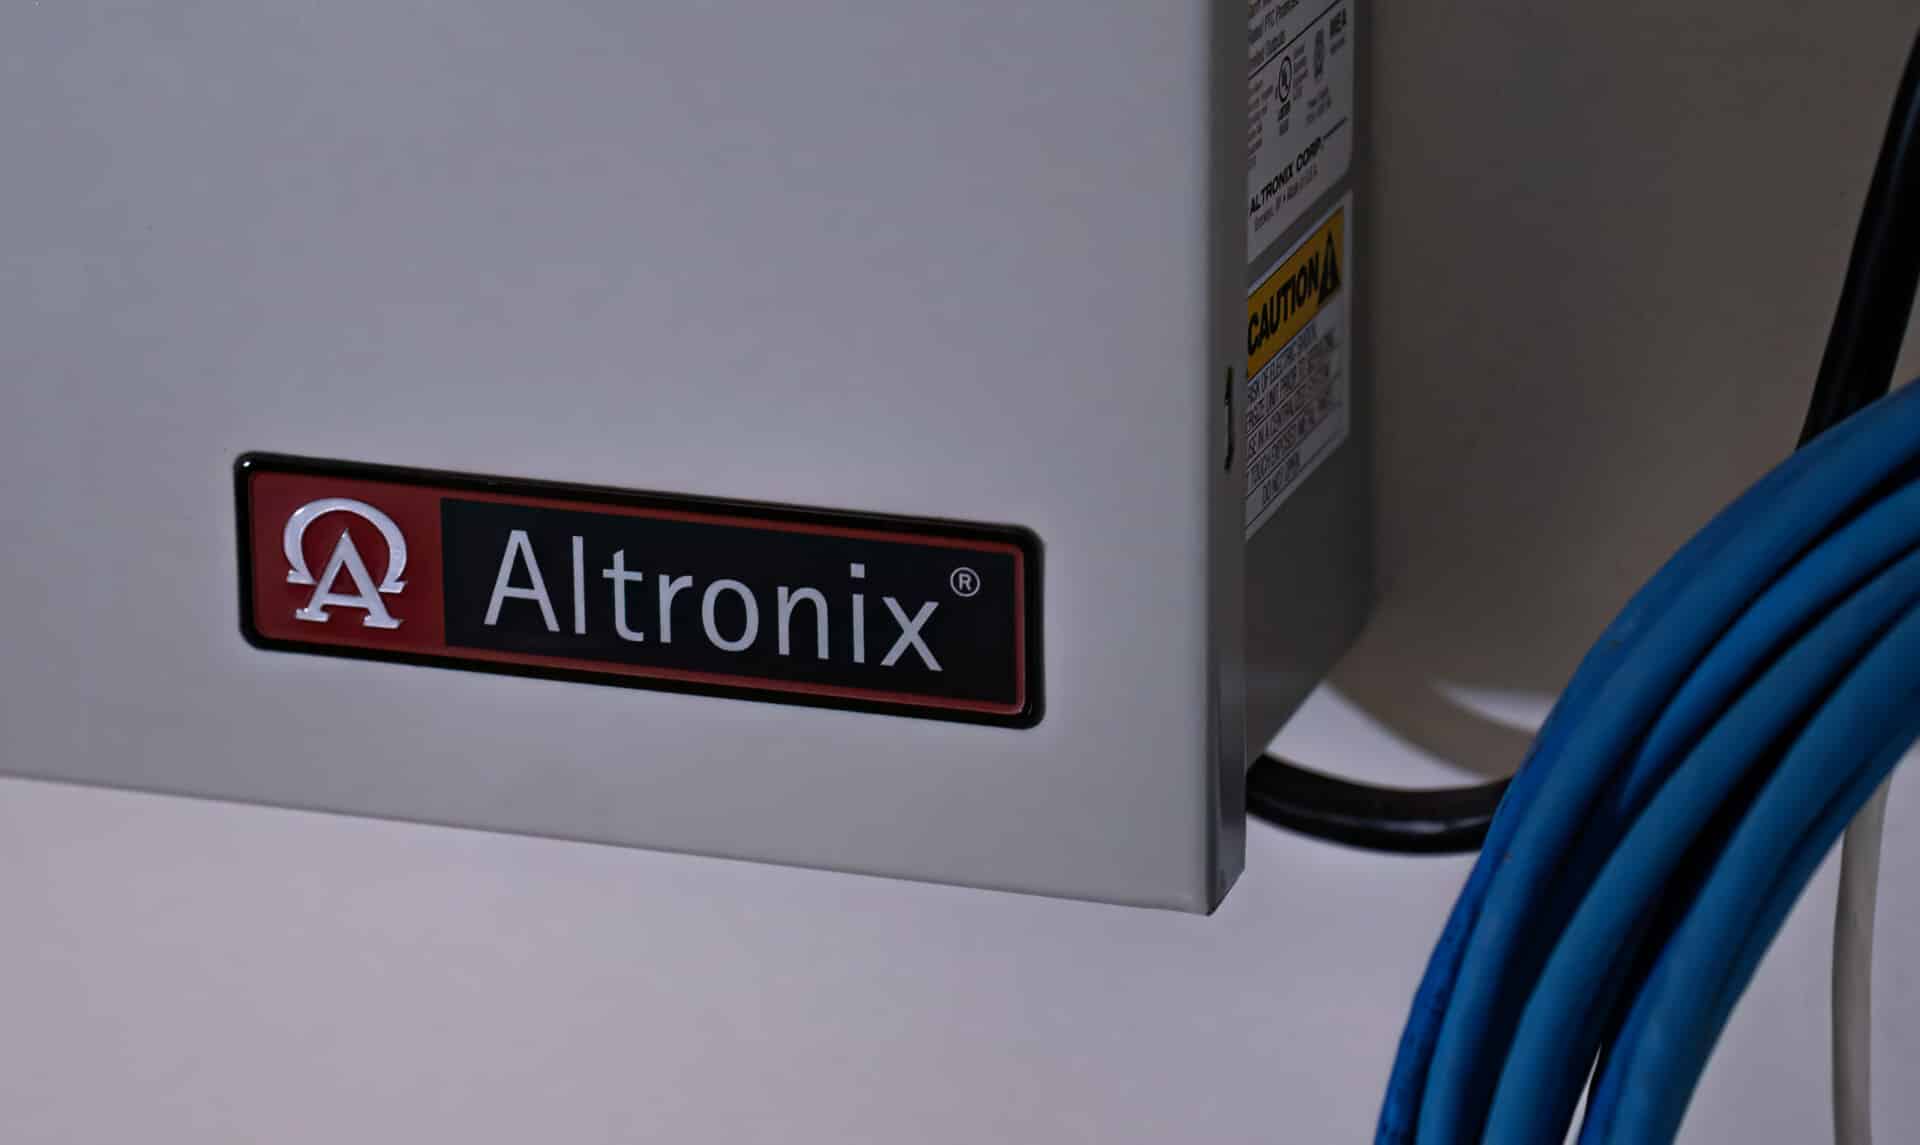 Altronix brand name on security panel door.